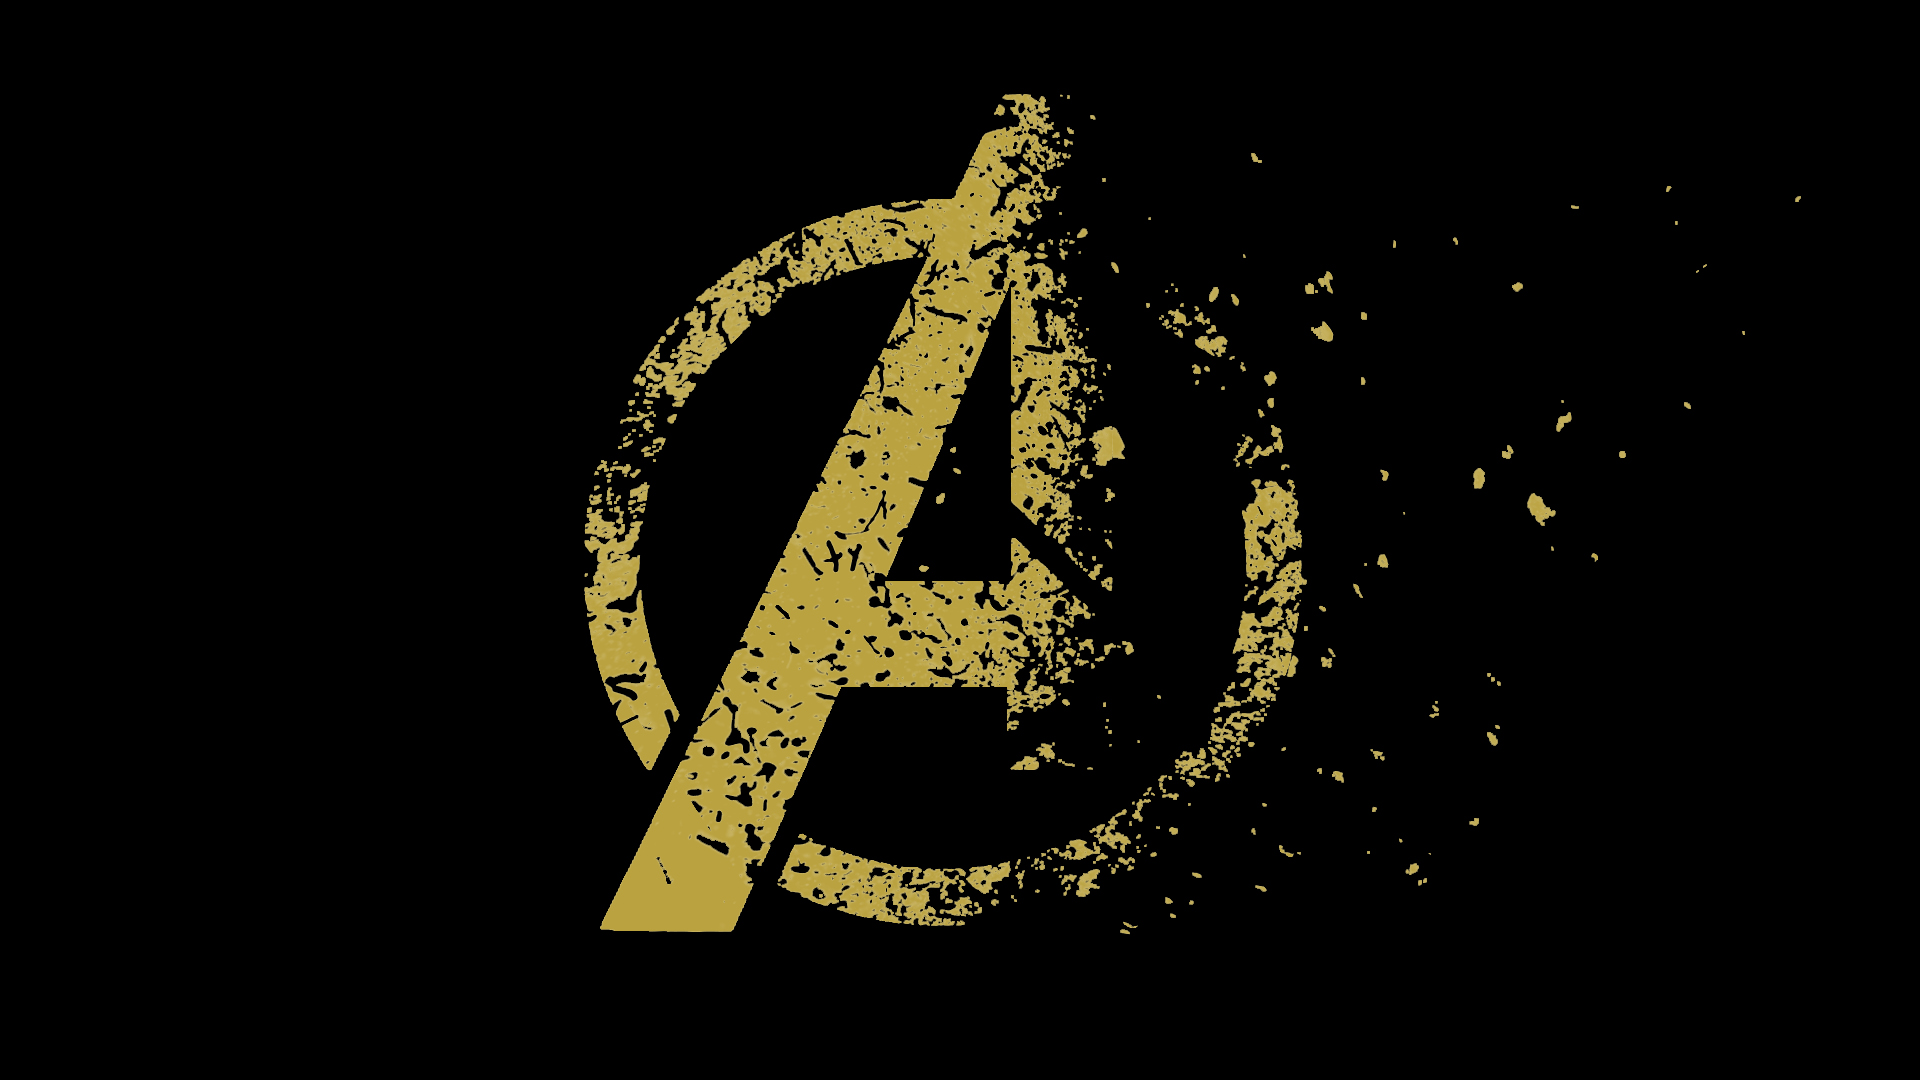 27+] Avengers Endgame Logo Wallpapers On WallpaperSafari